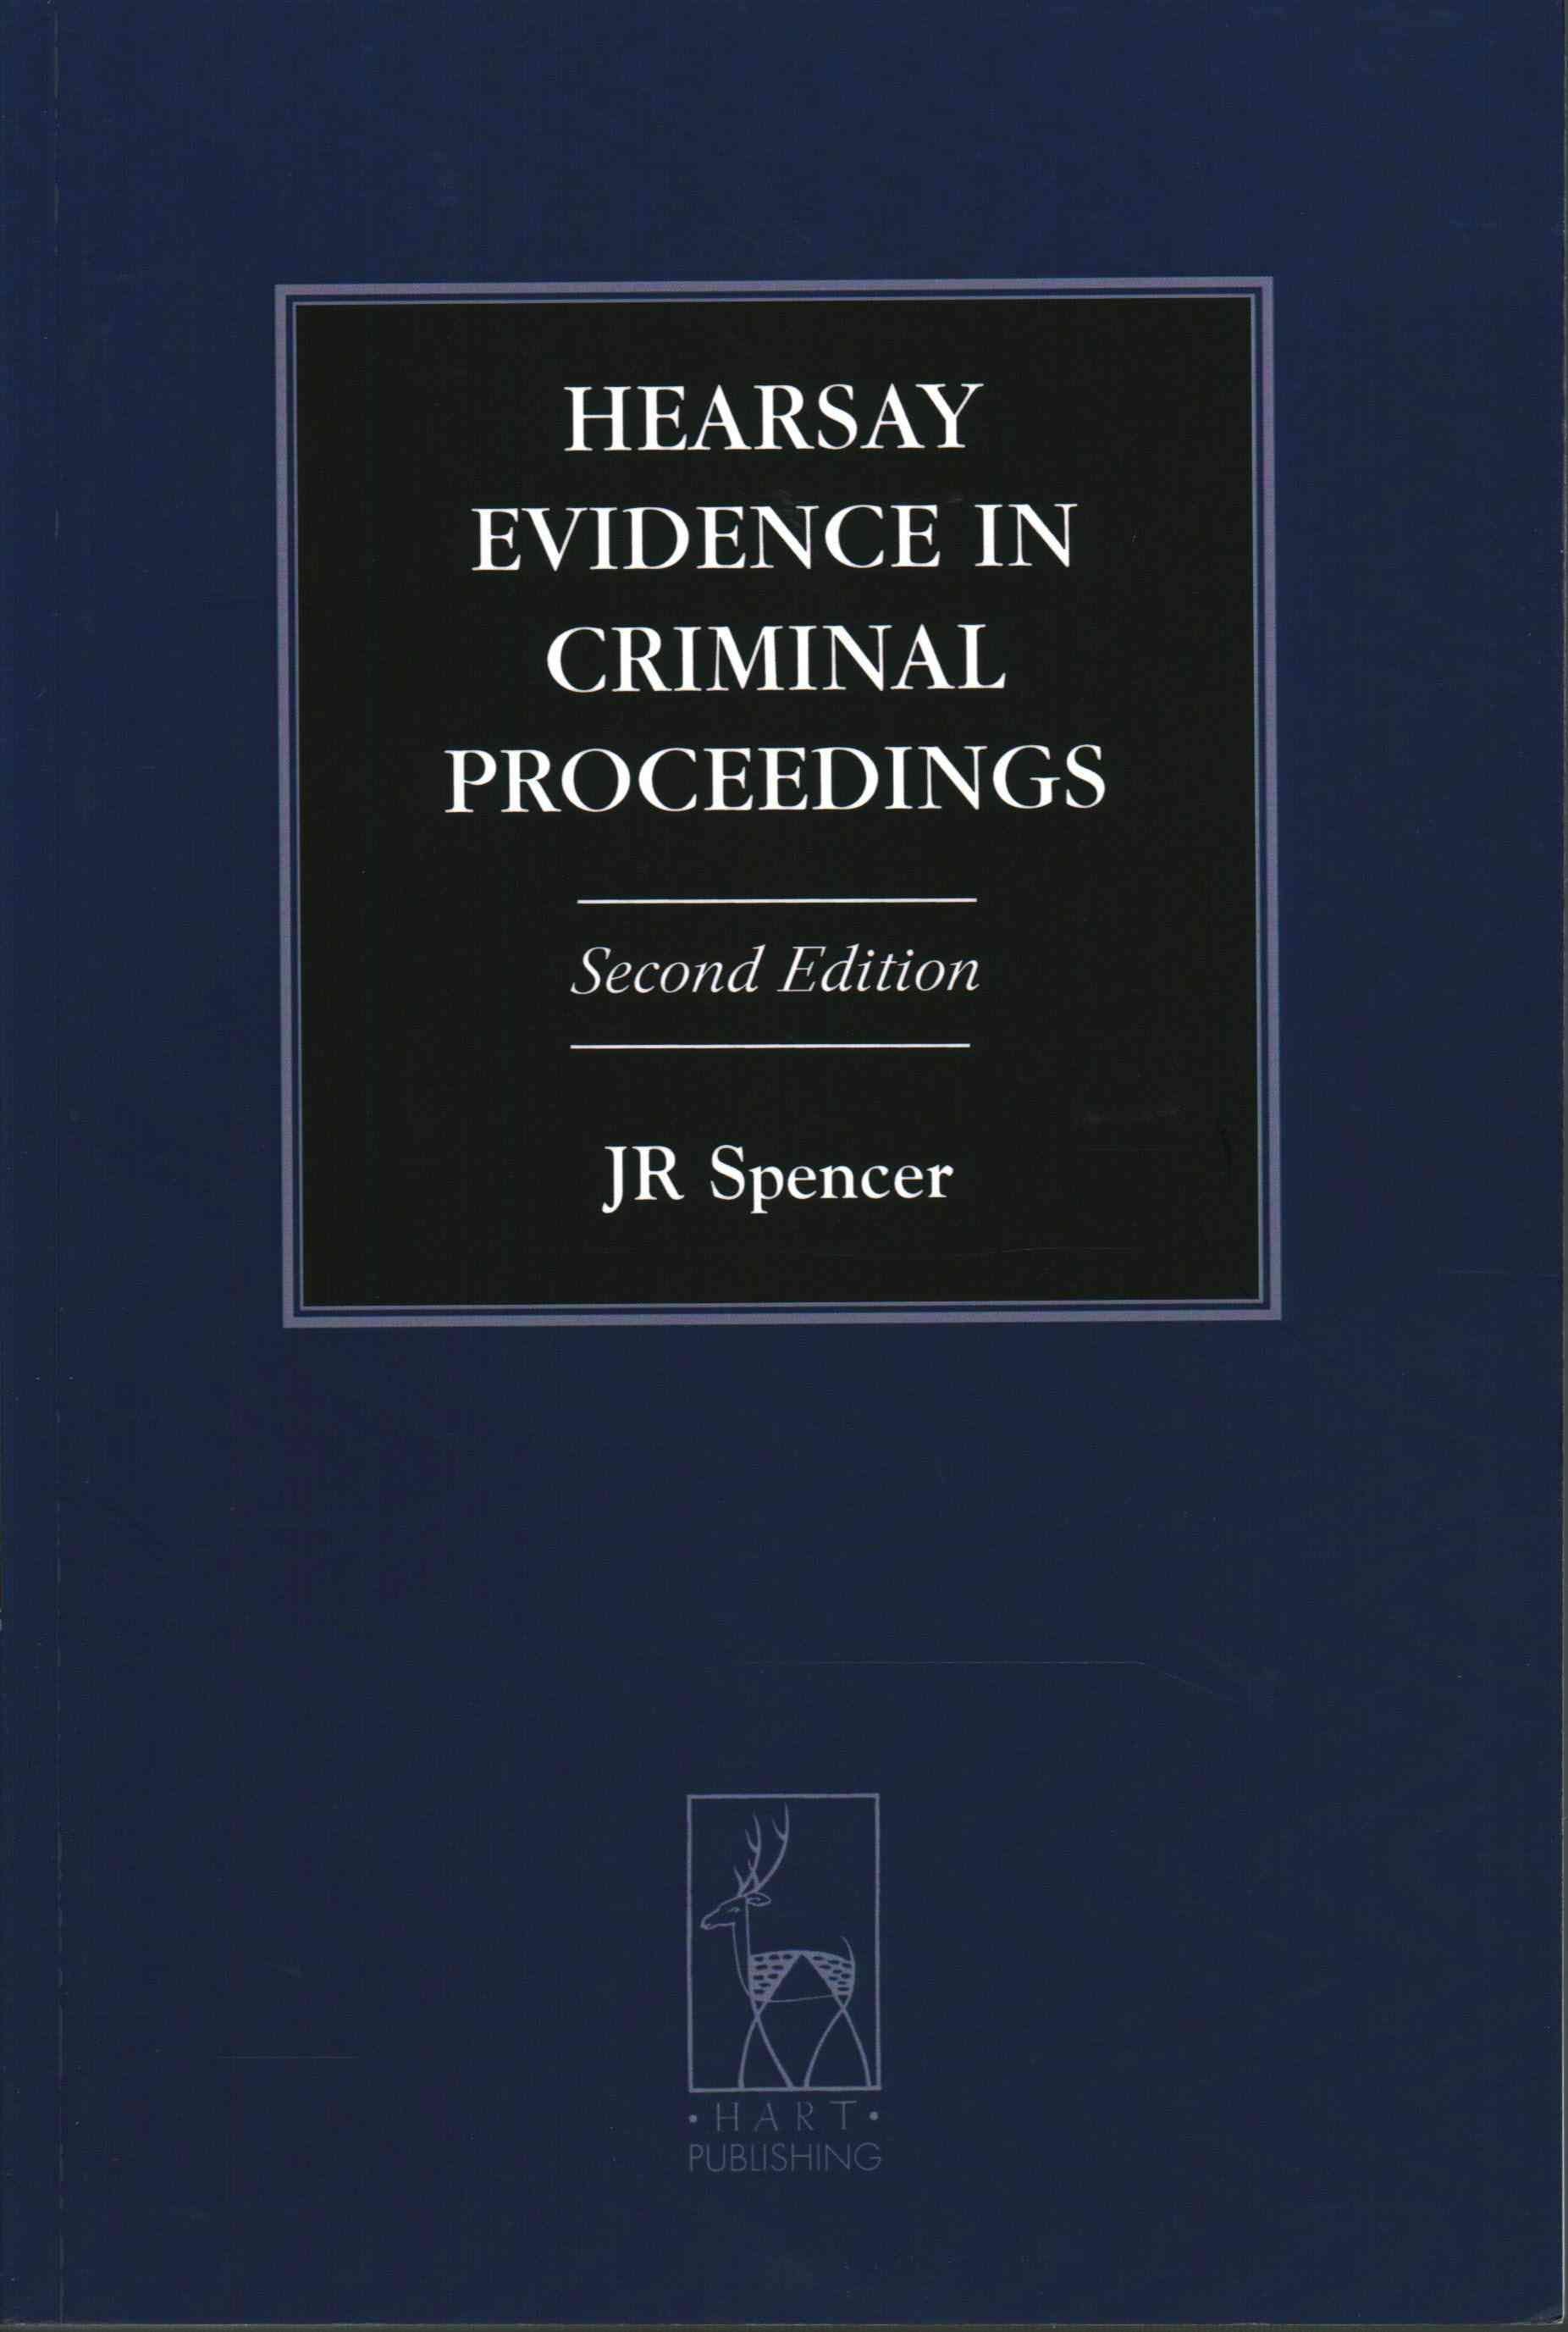 Hearsay Evidence in Criminal Proceedings